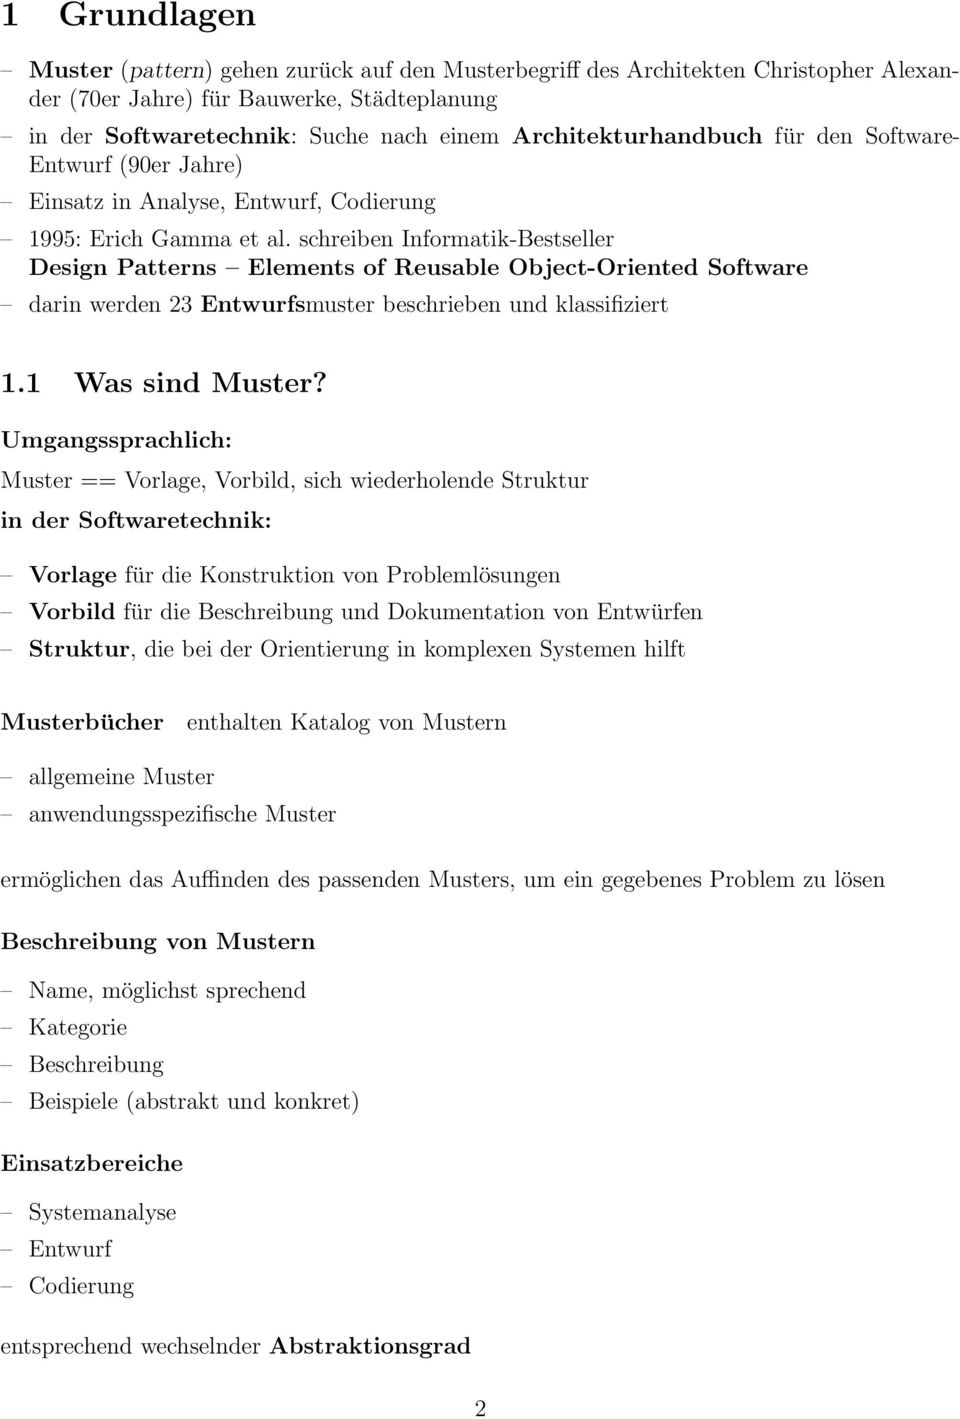 schreiben Informatik-Bestseller Design Patterns Elements of Reusable Object-Oriented Software darin werden 23 Entwurfsmuster beschrieben und klassifiziert. Was sind Muster?